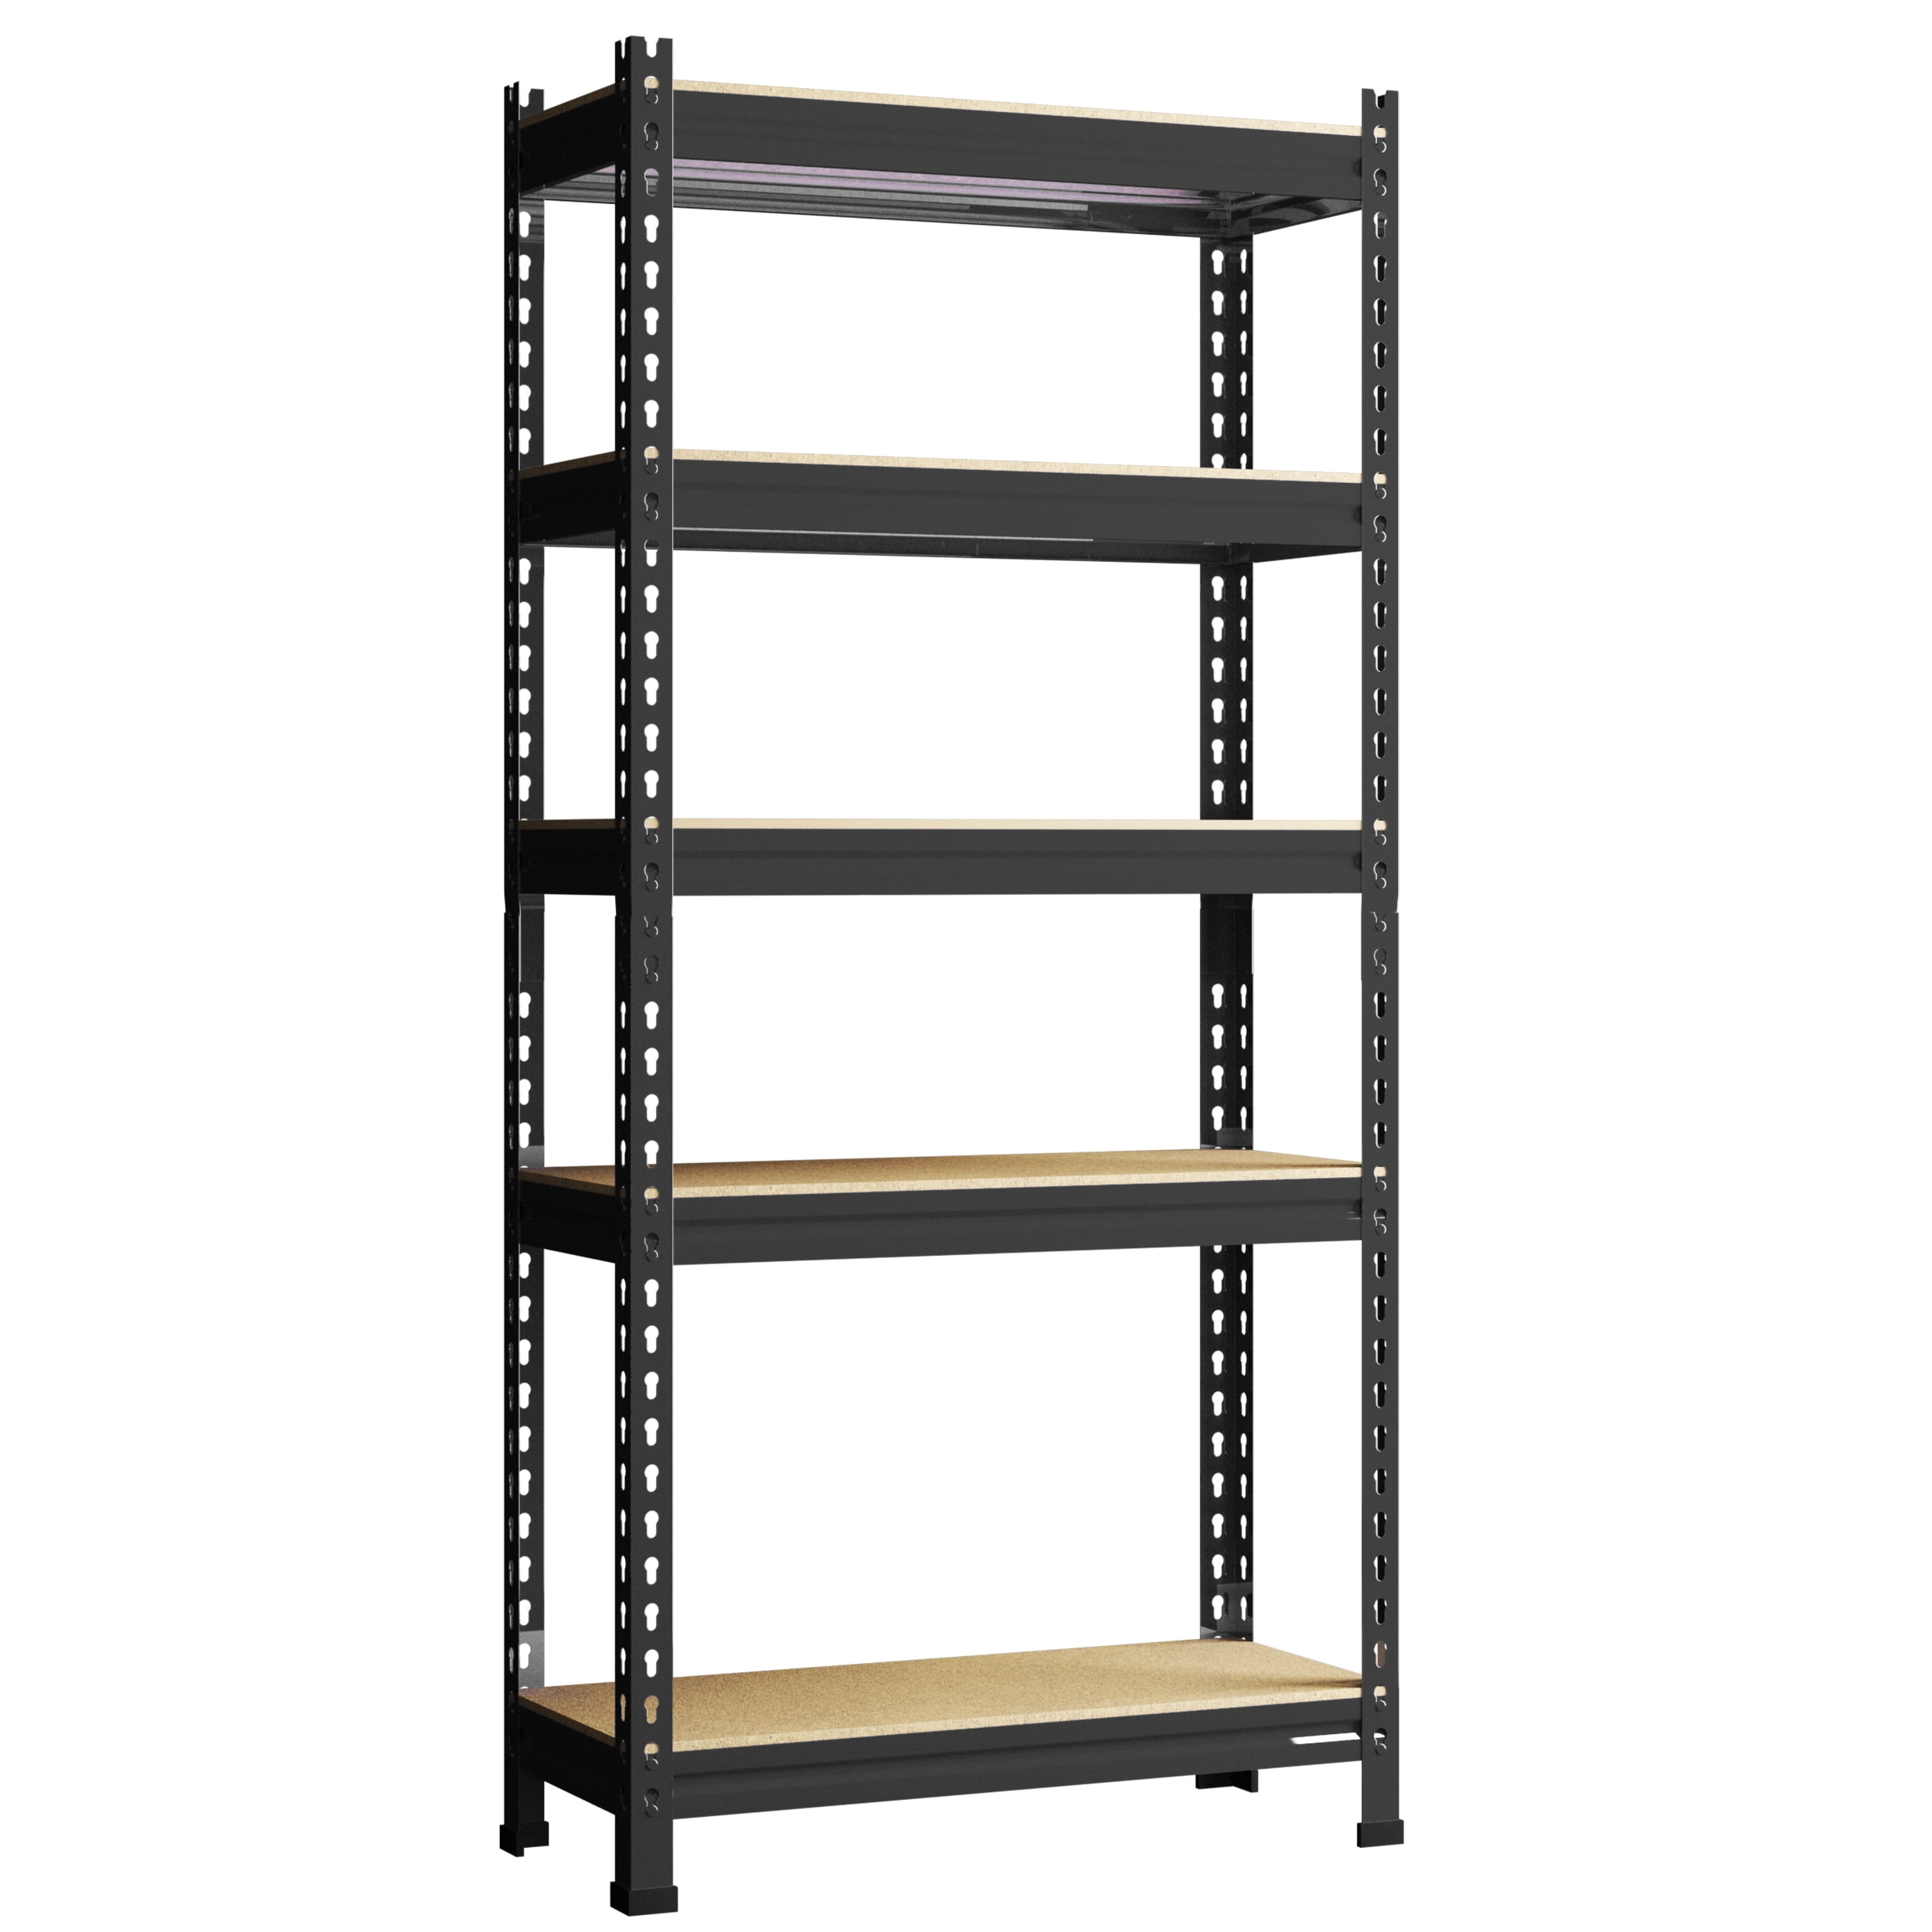 Kuma Tool Storage Shelves, 5 Tier Adjustable Metal Garage Shelf Utility Rack Unit for Adult Warehouse Kitchen, 28 inch x 12 inch x 59 inch, Black